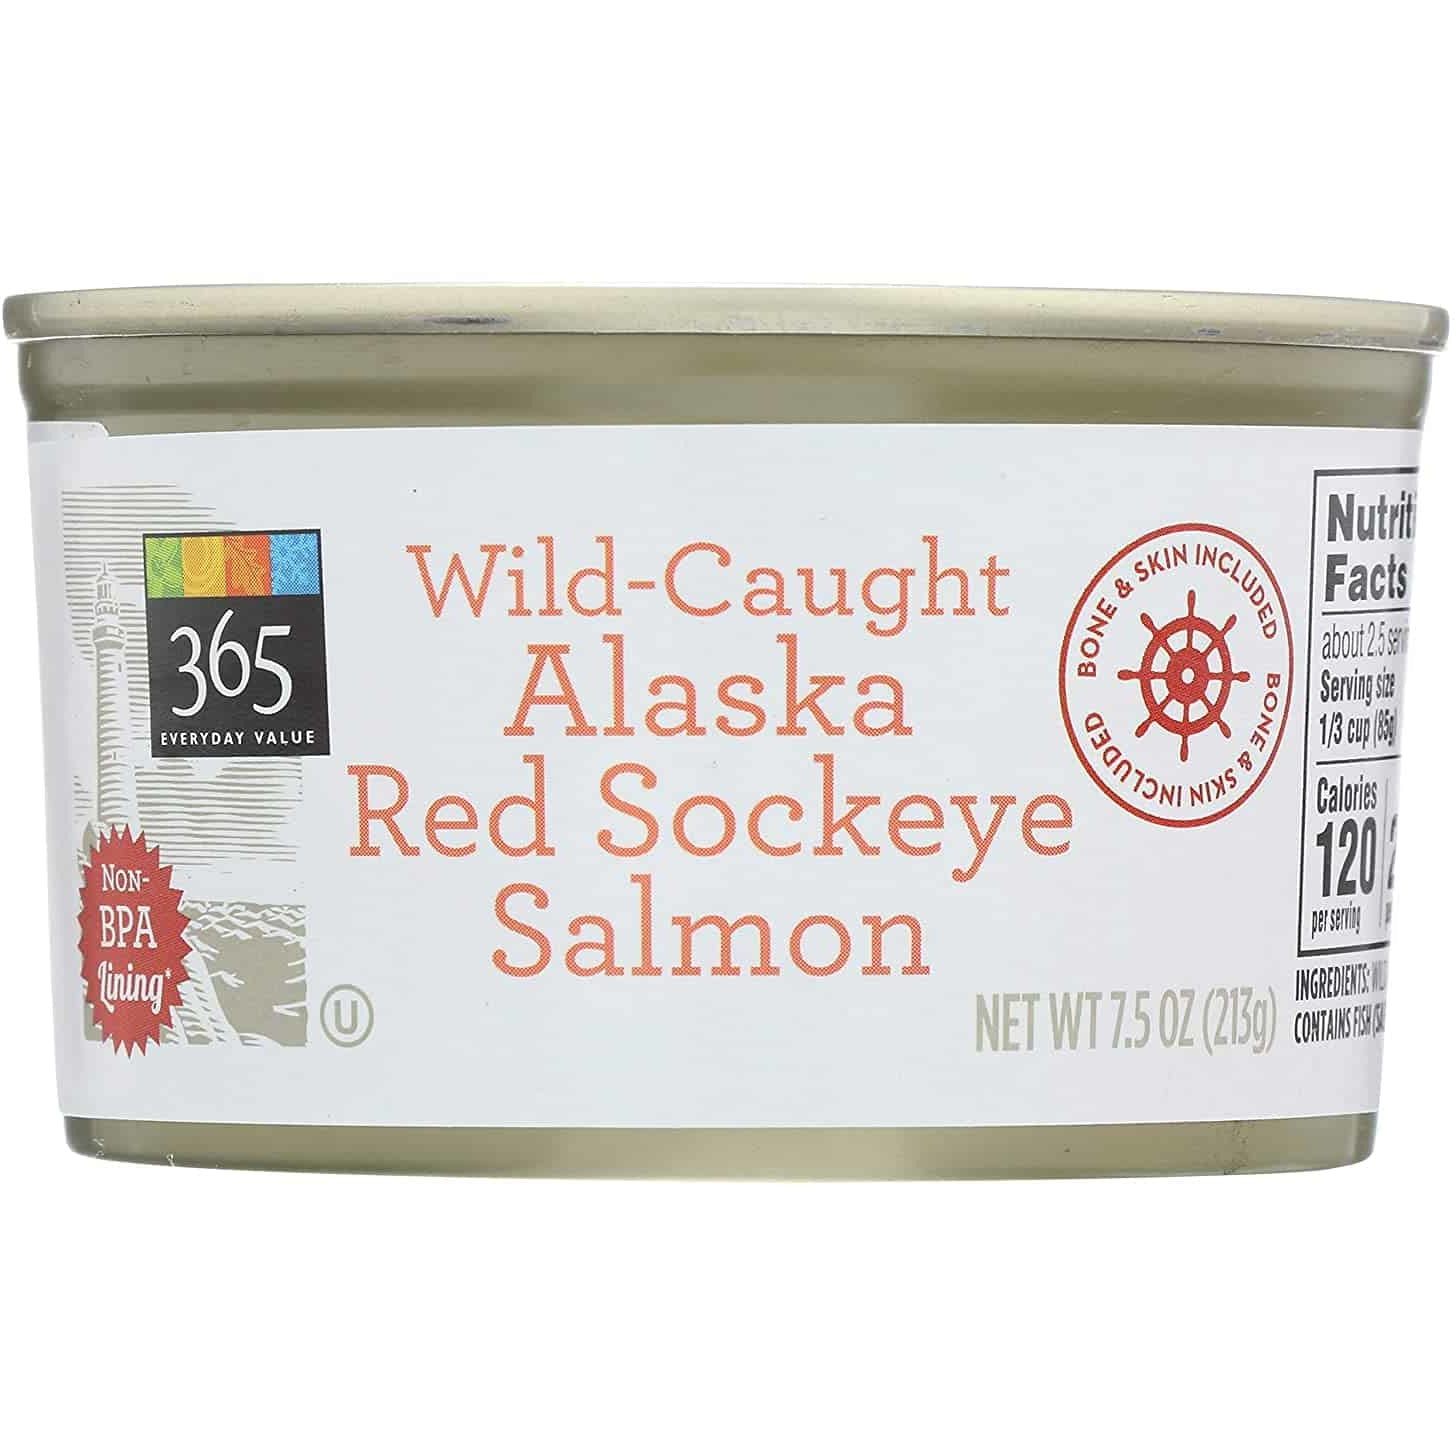 Oasis Fresh Alaskan Wild Salmon, Red Sockeye, 7.5 oz